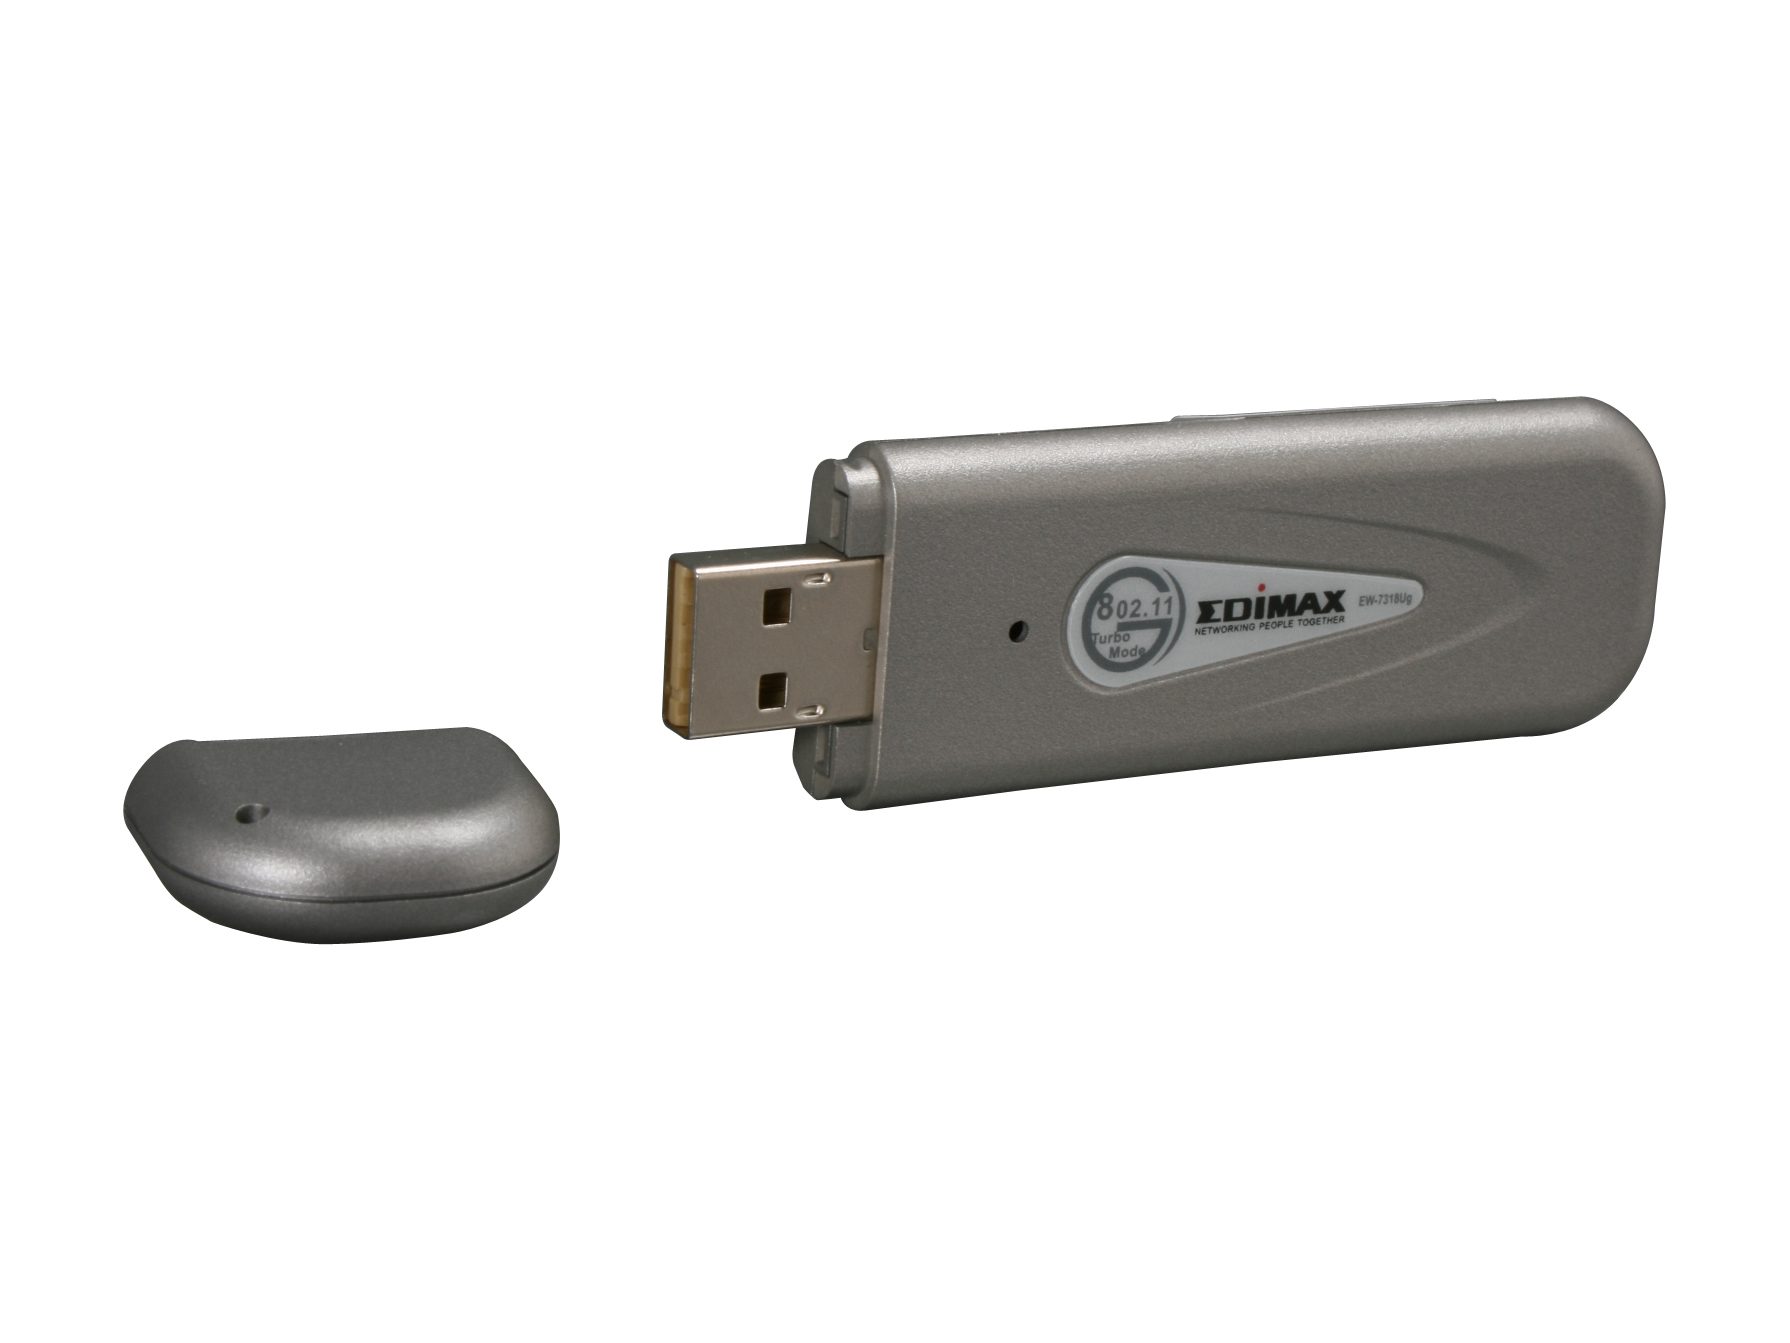 EDIMAX EW 7318UG USB 2.0 802.11g Wireless LAN Mini USB Adapter